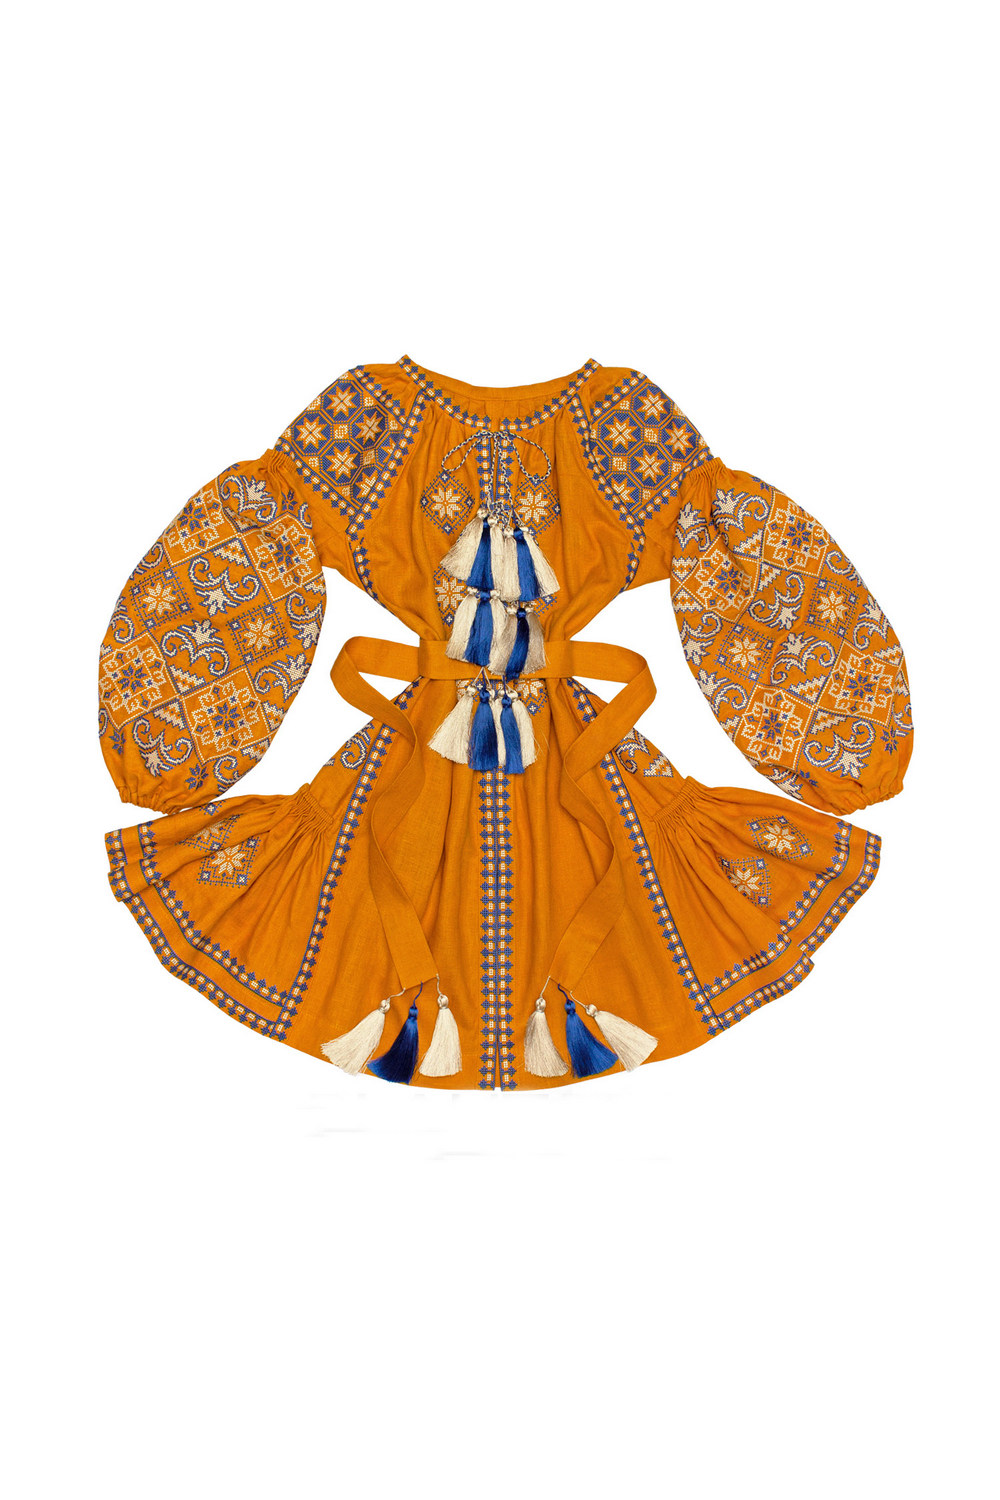 Buy Boho Hippie Folk Festival Linen Yellow Ukrainian Vyshyvanka dress, Comfortable embroidered dress